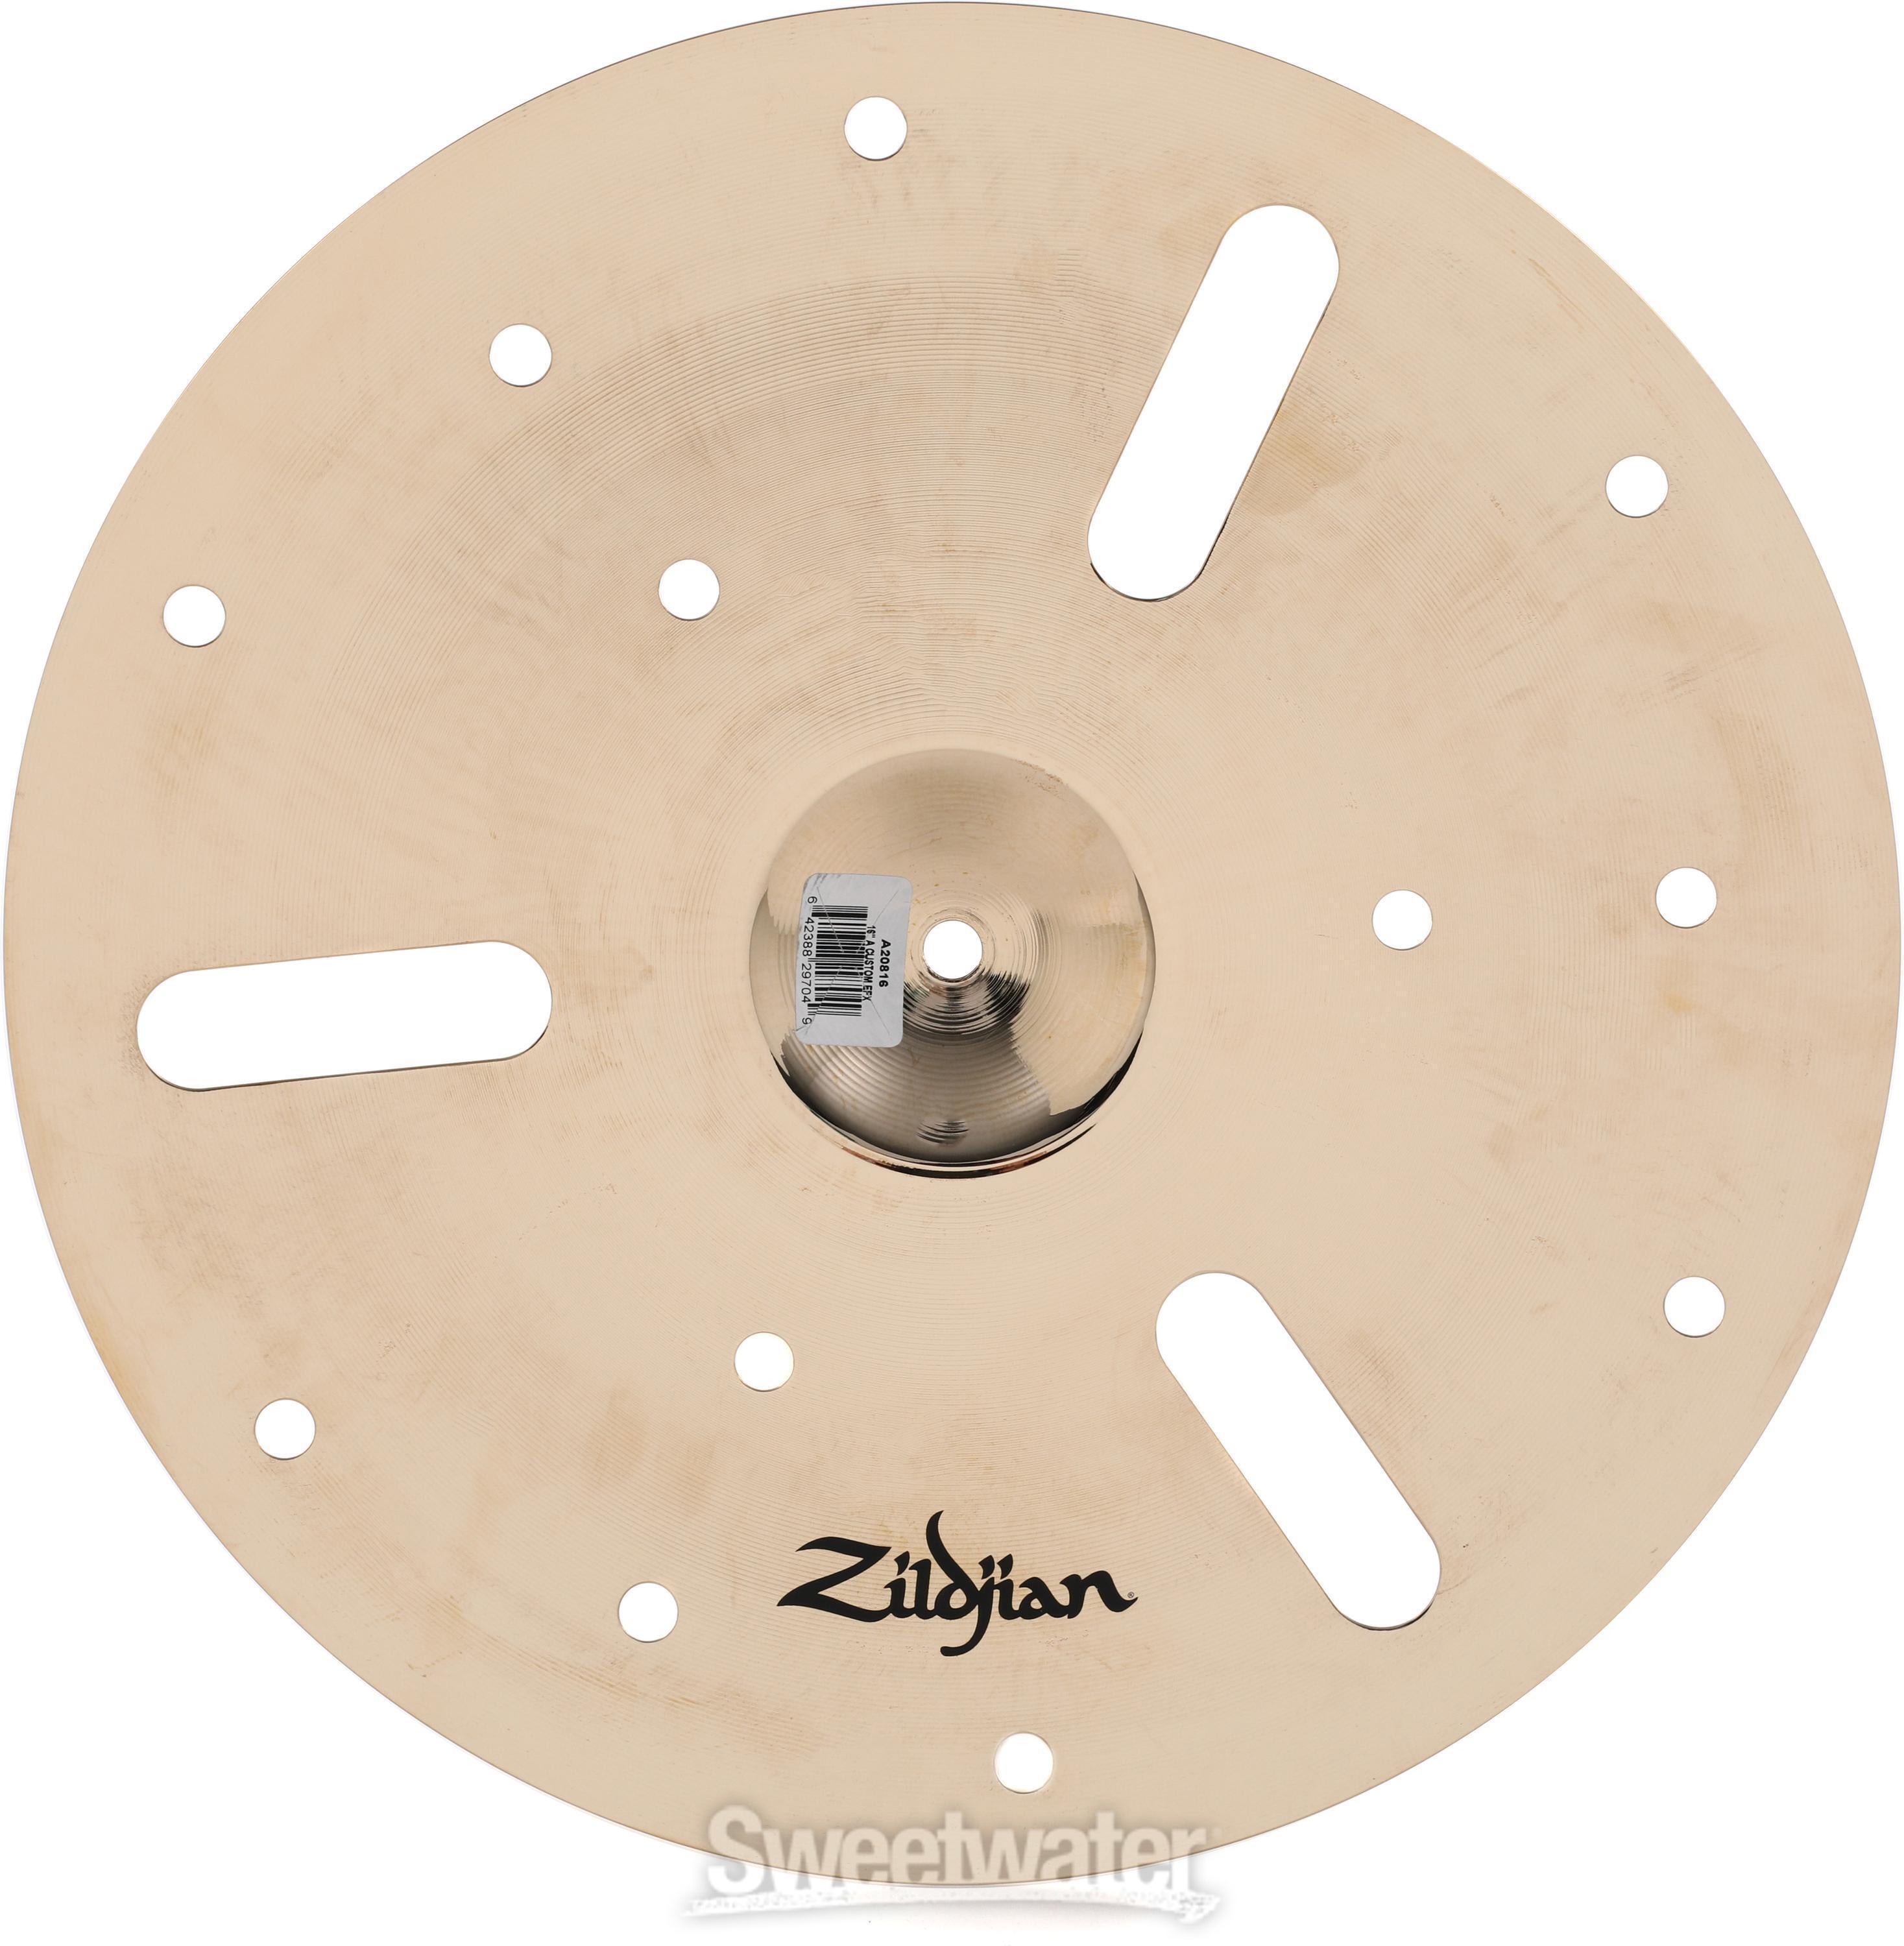 Zildjian  inch A Custom EFX Crash Cymbal   Sweetwater